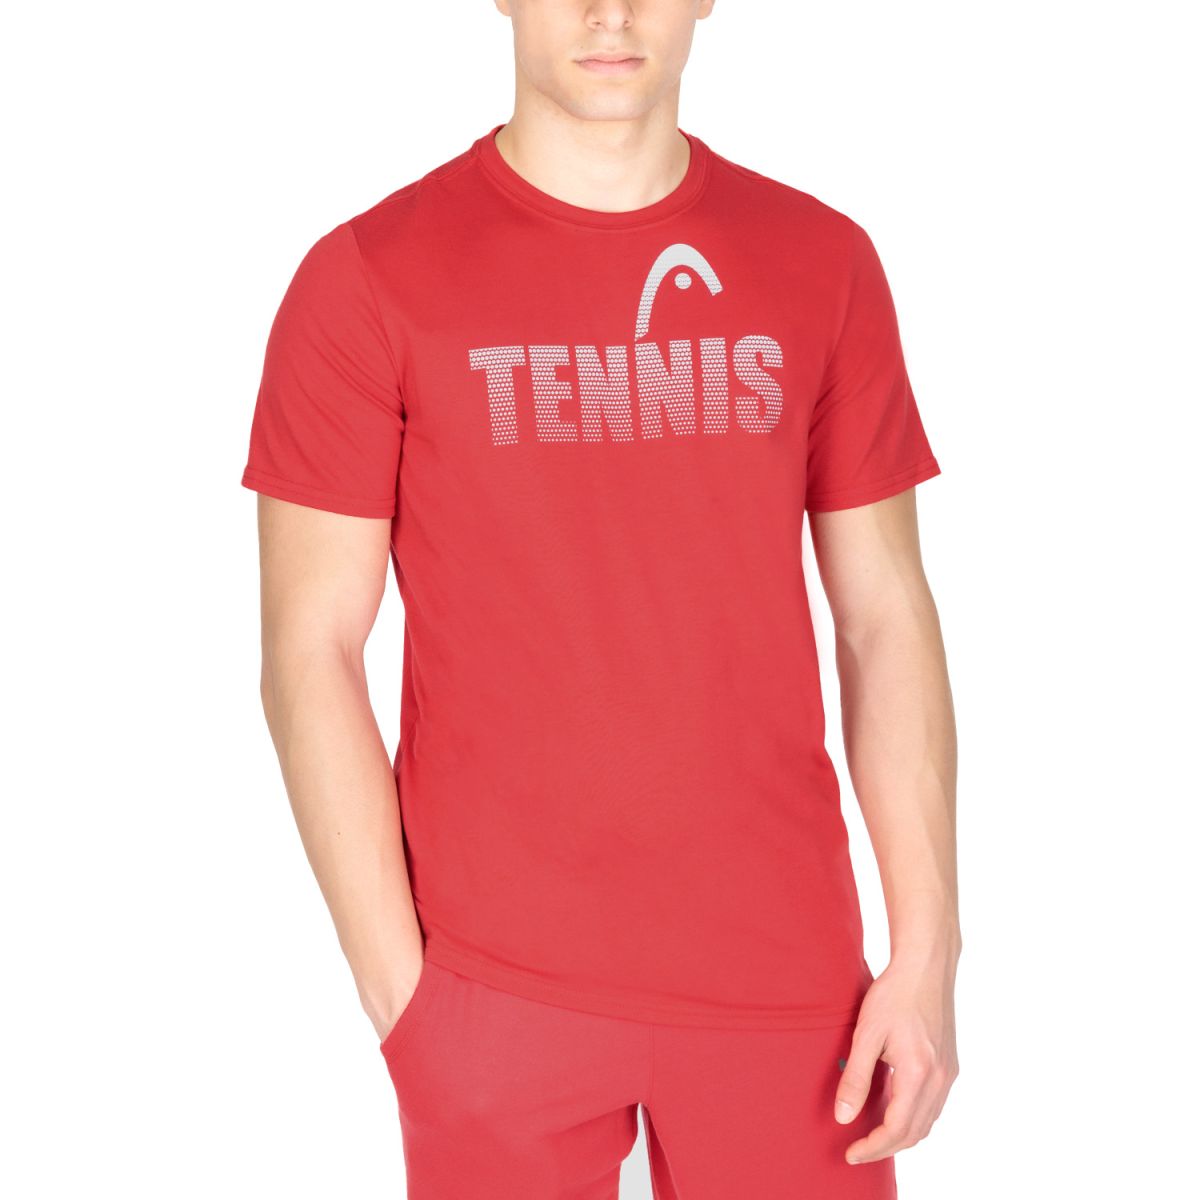 Head Club Colin Men's Tennis T-Shirt 811712-Red